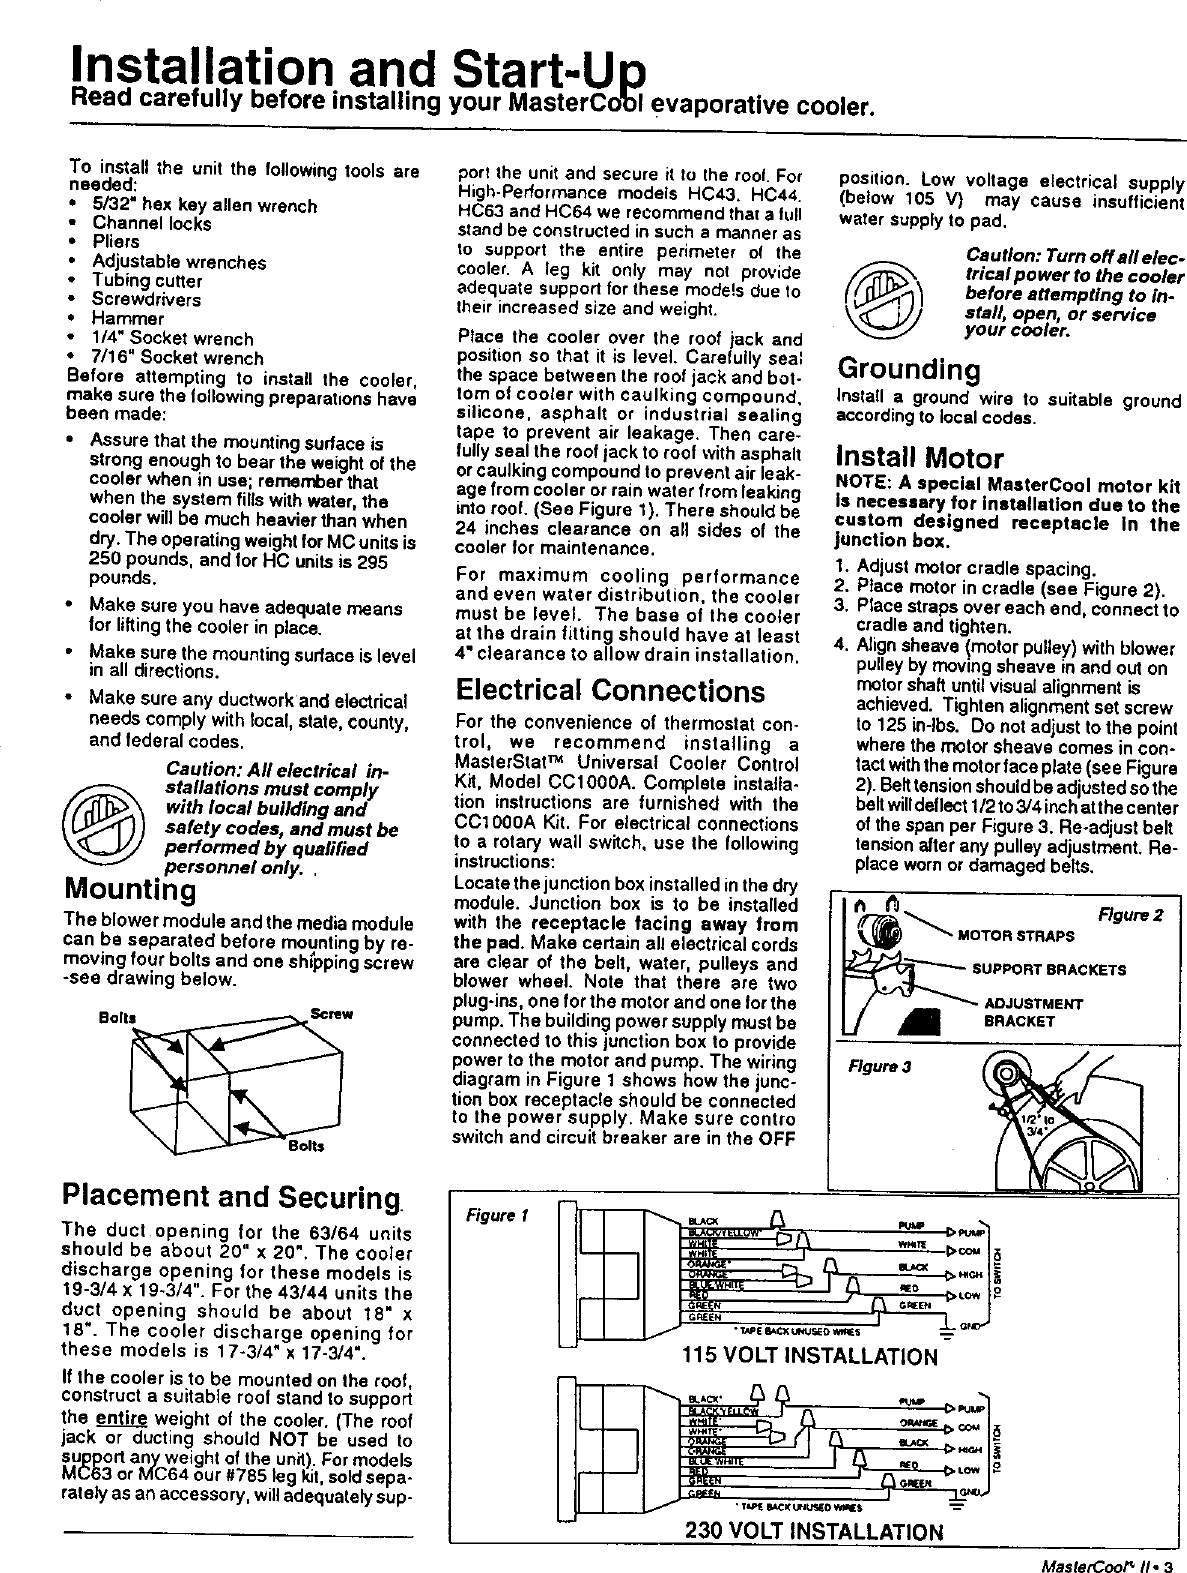 Page 3 of 8 - ADOBEAIR  Evaporative Cooler Manual L9070130